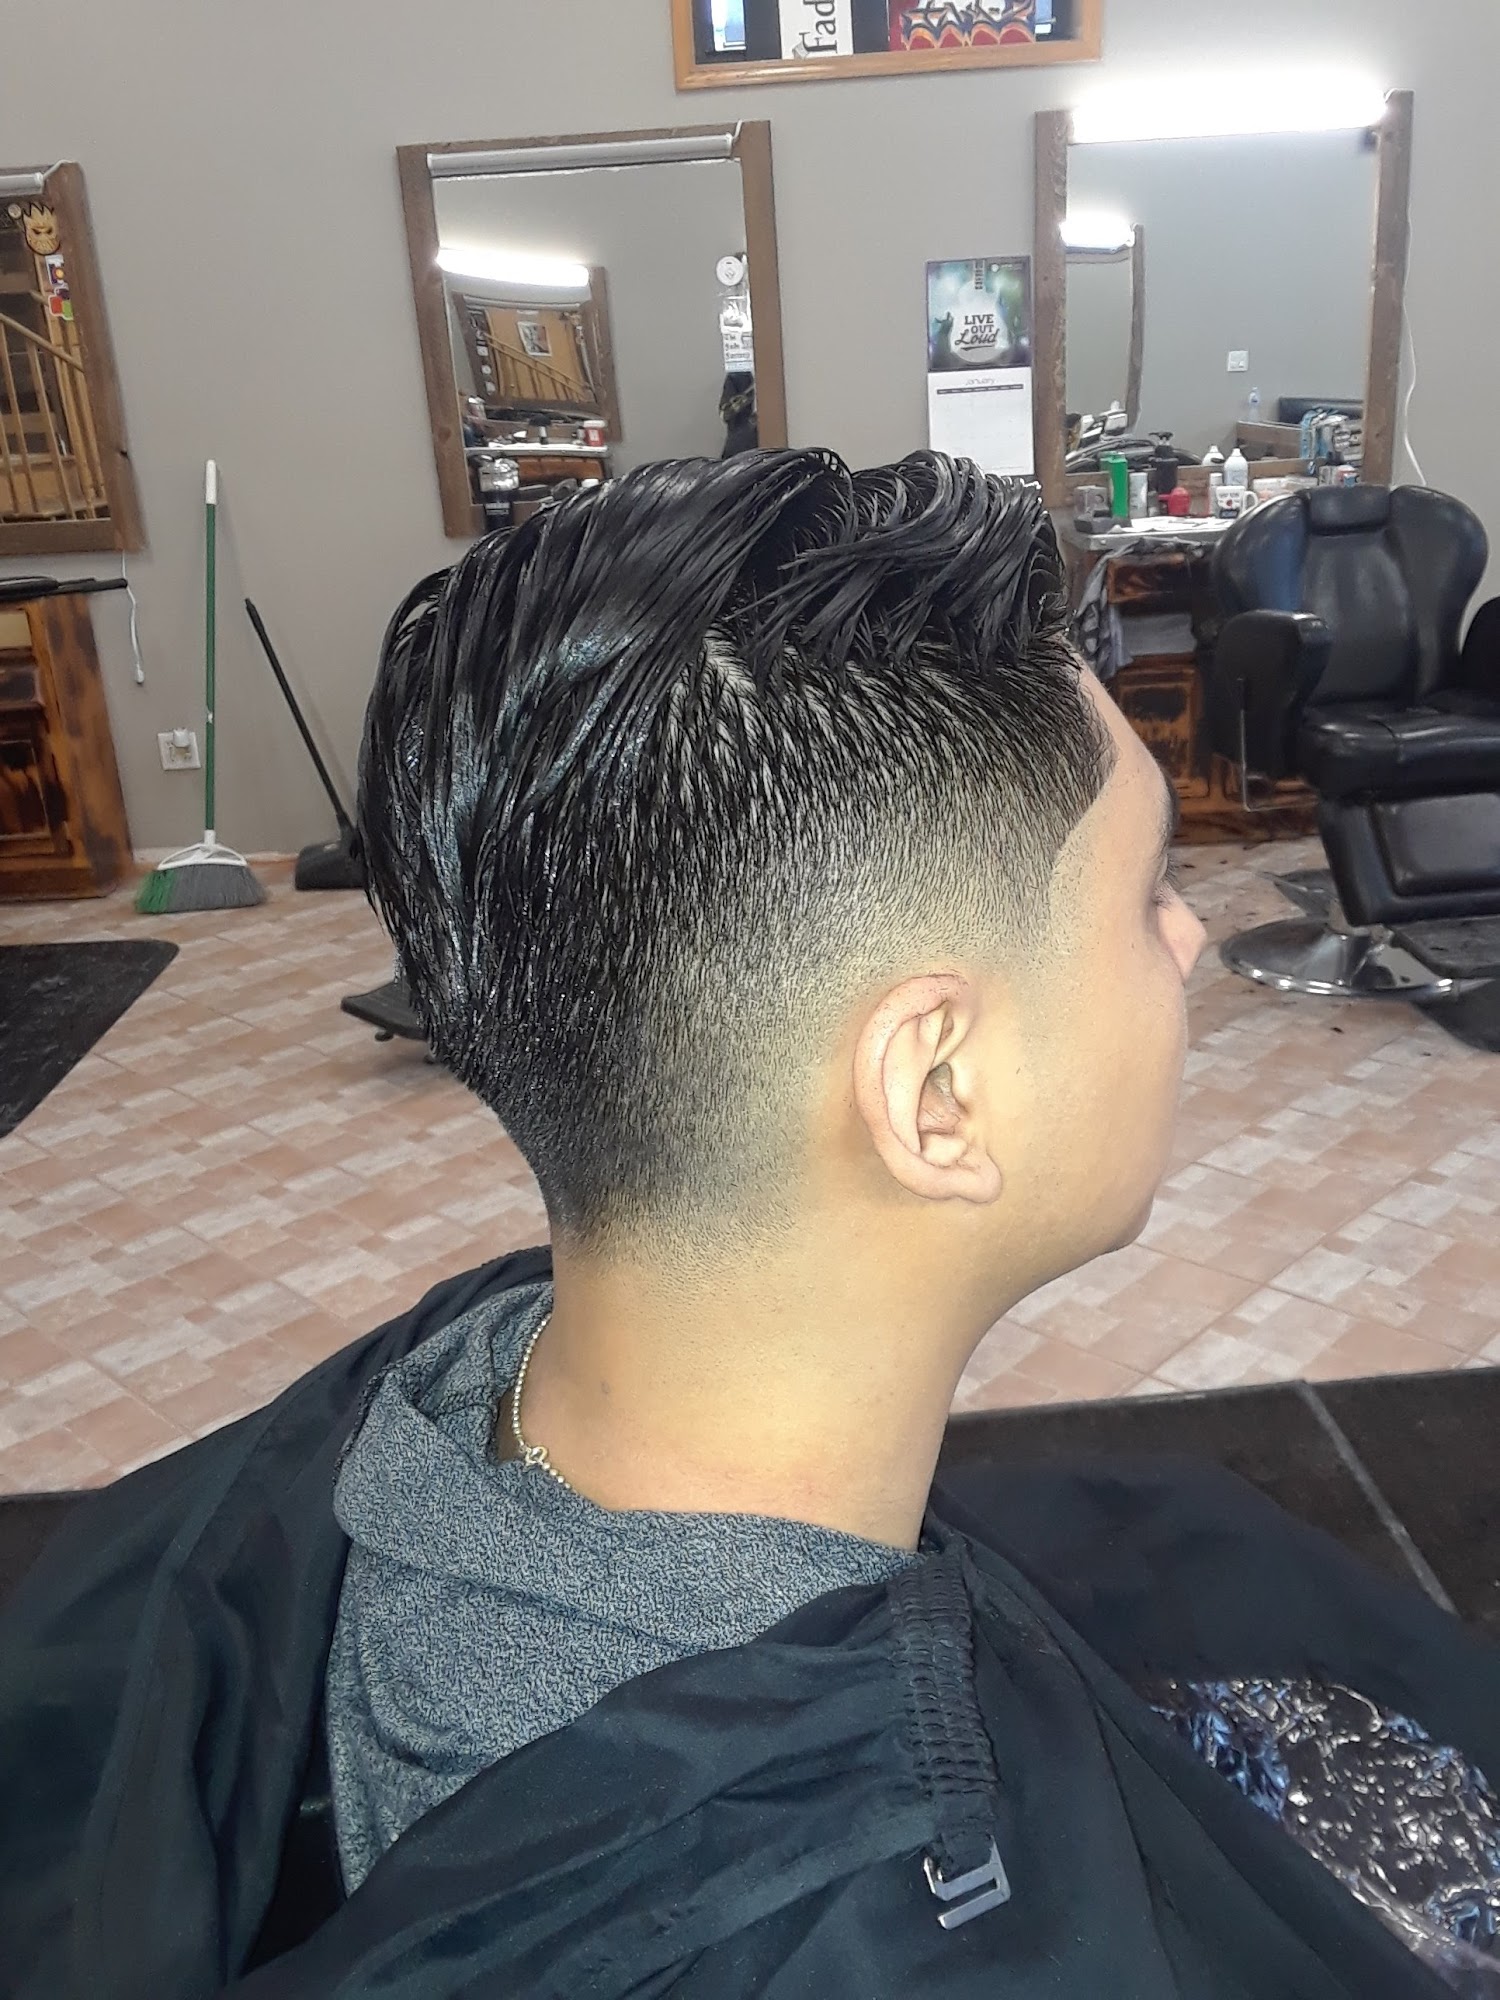 Santi the Barber